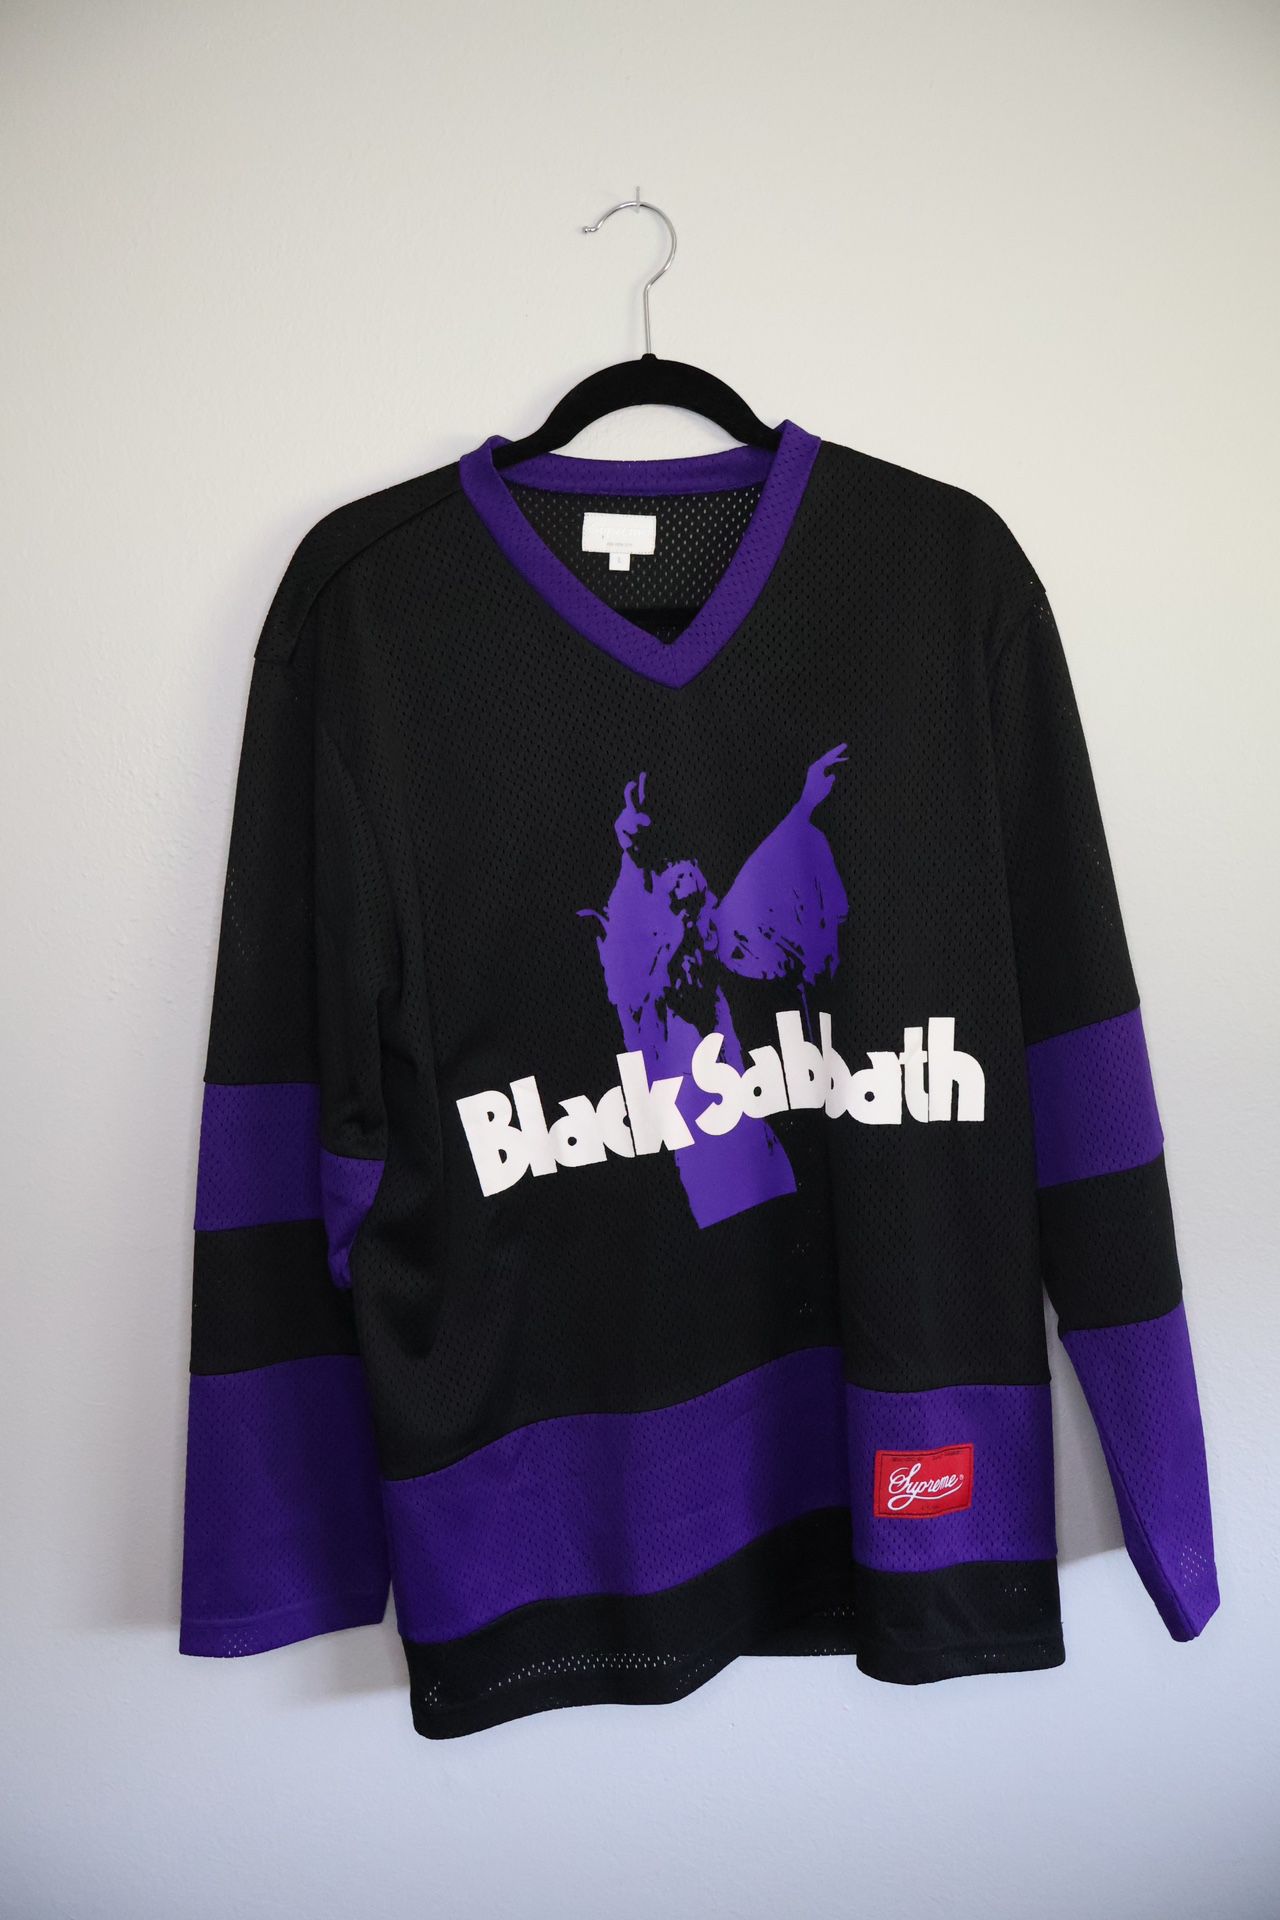 Supreme x Black Sabbath Hockey Jersey for Sale in Huntington Beach